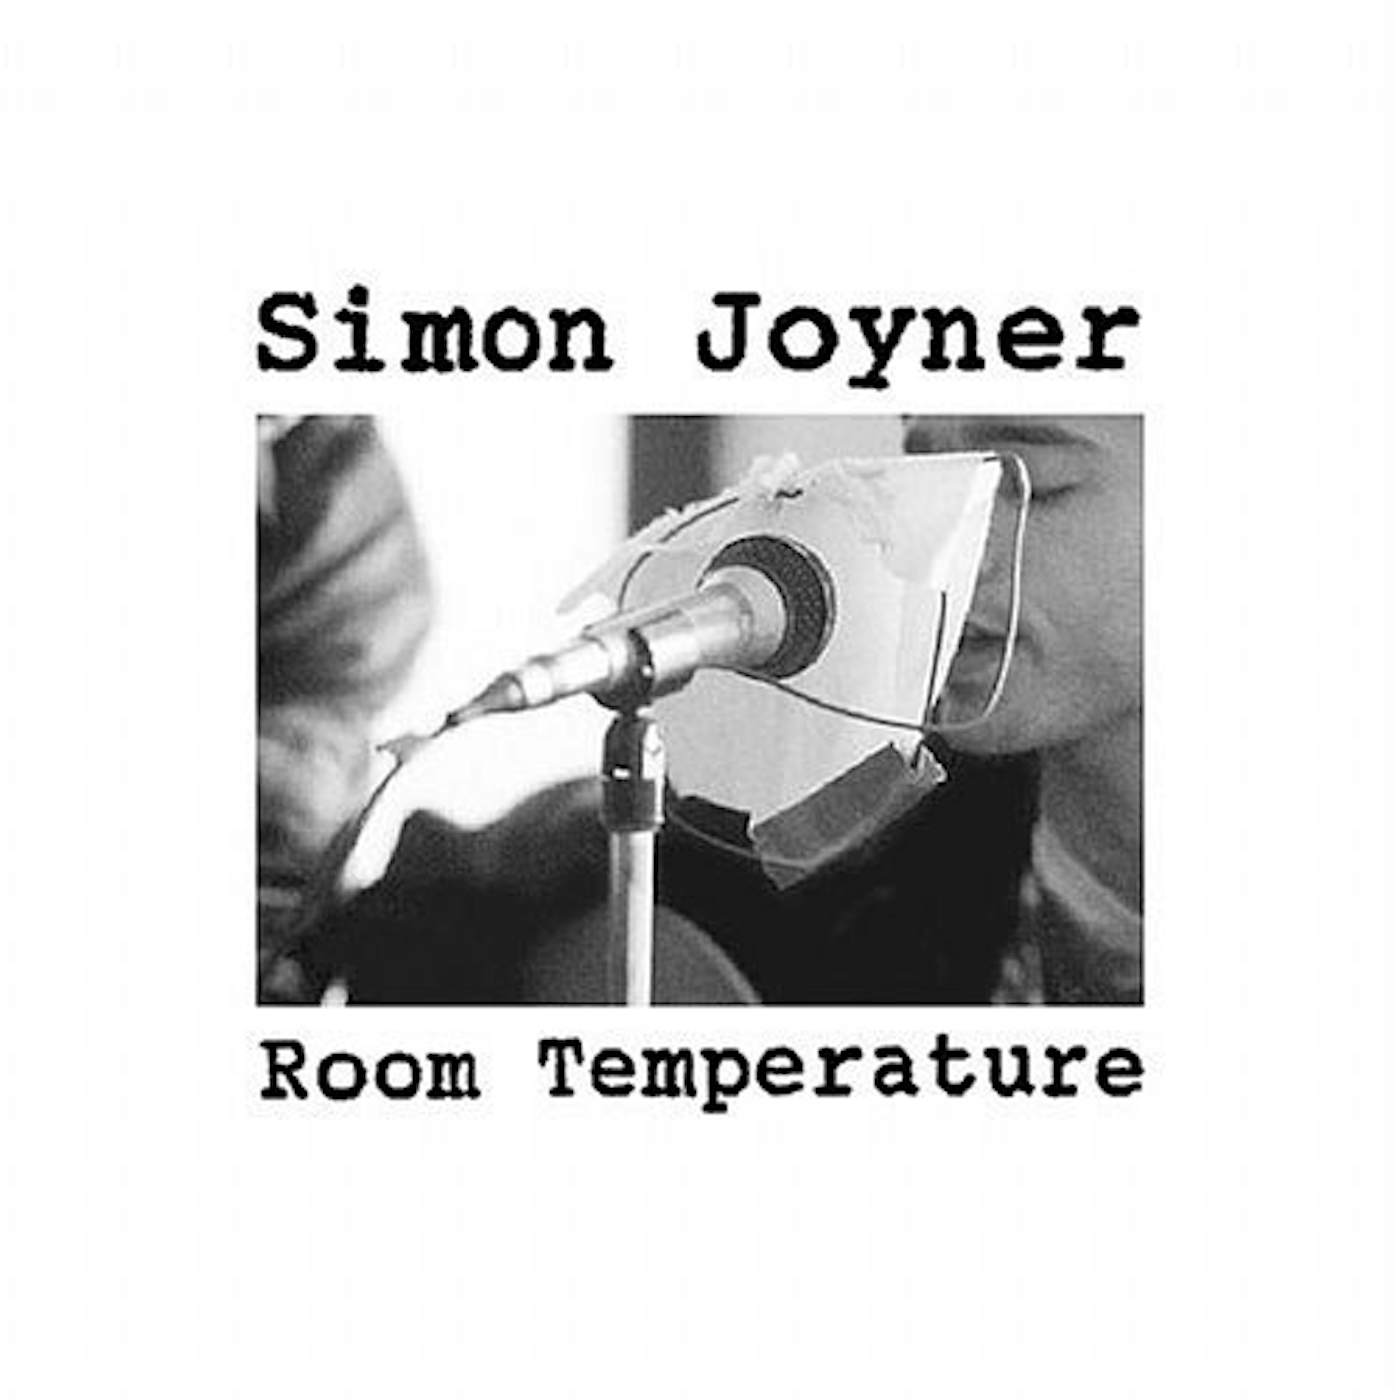 Simon Joyner Room Temperature Vinyl Record